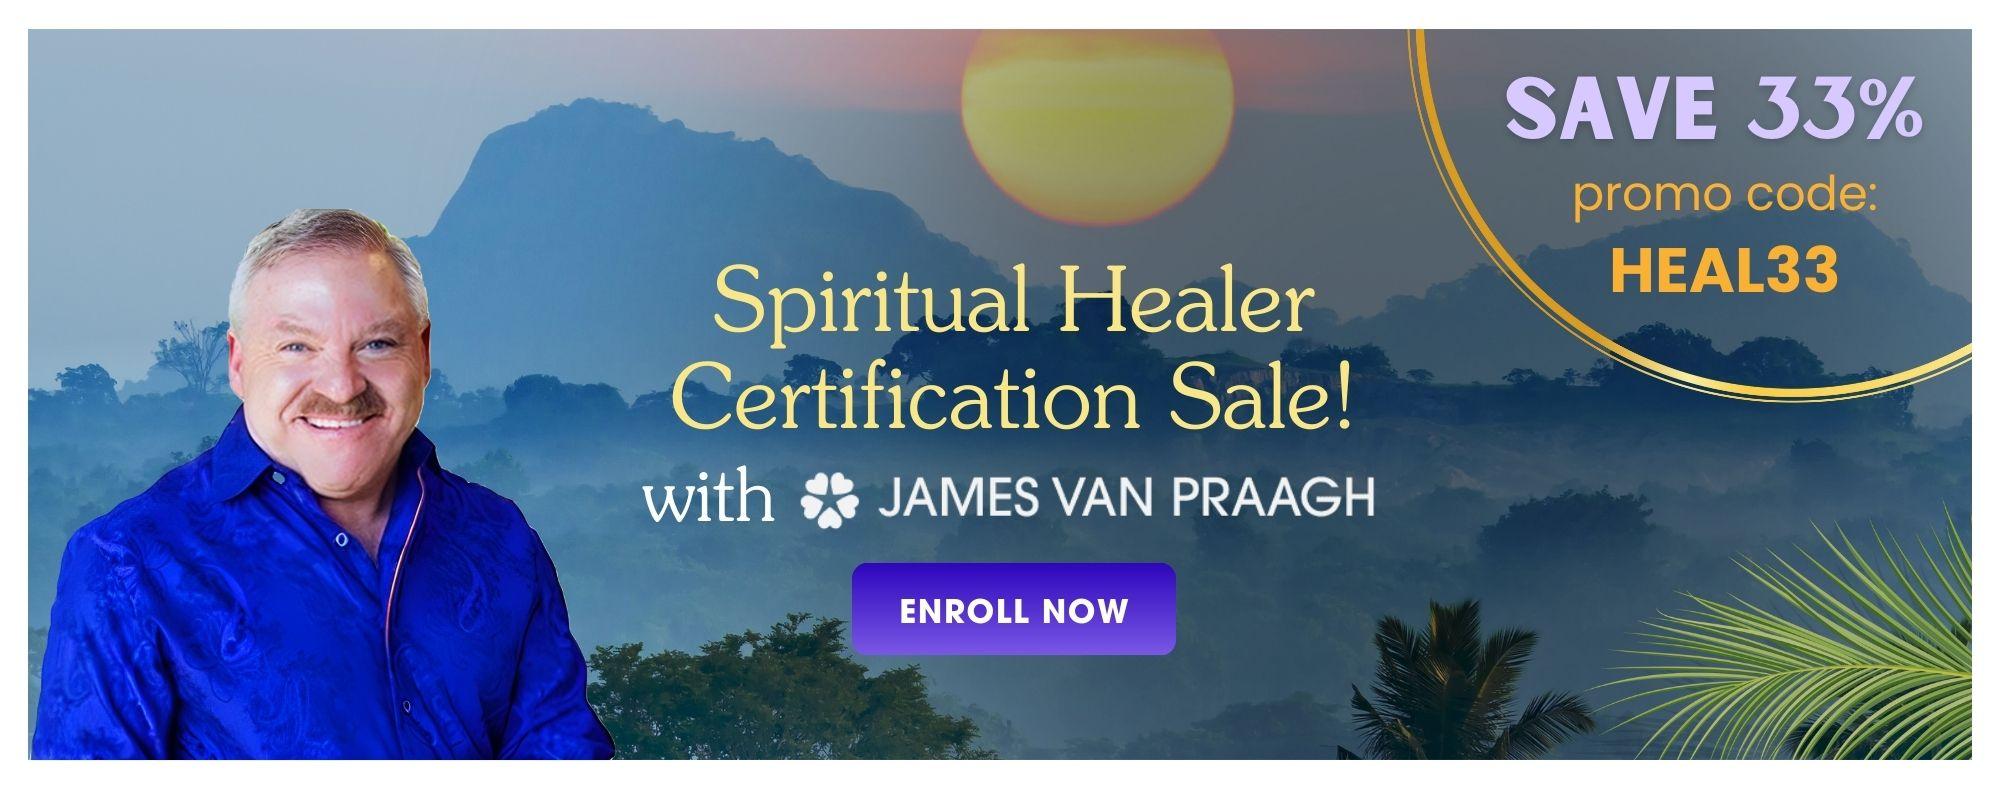 Spiritual Healer Certification with James Van Praagh